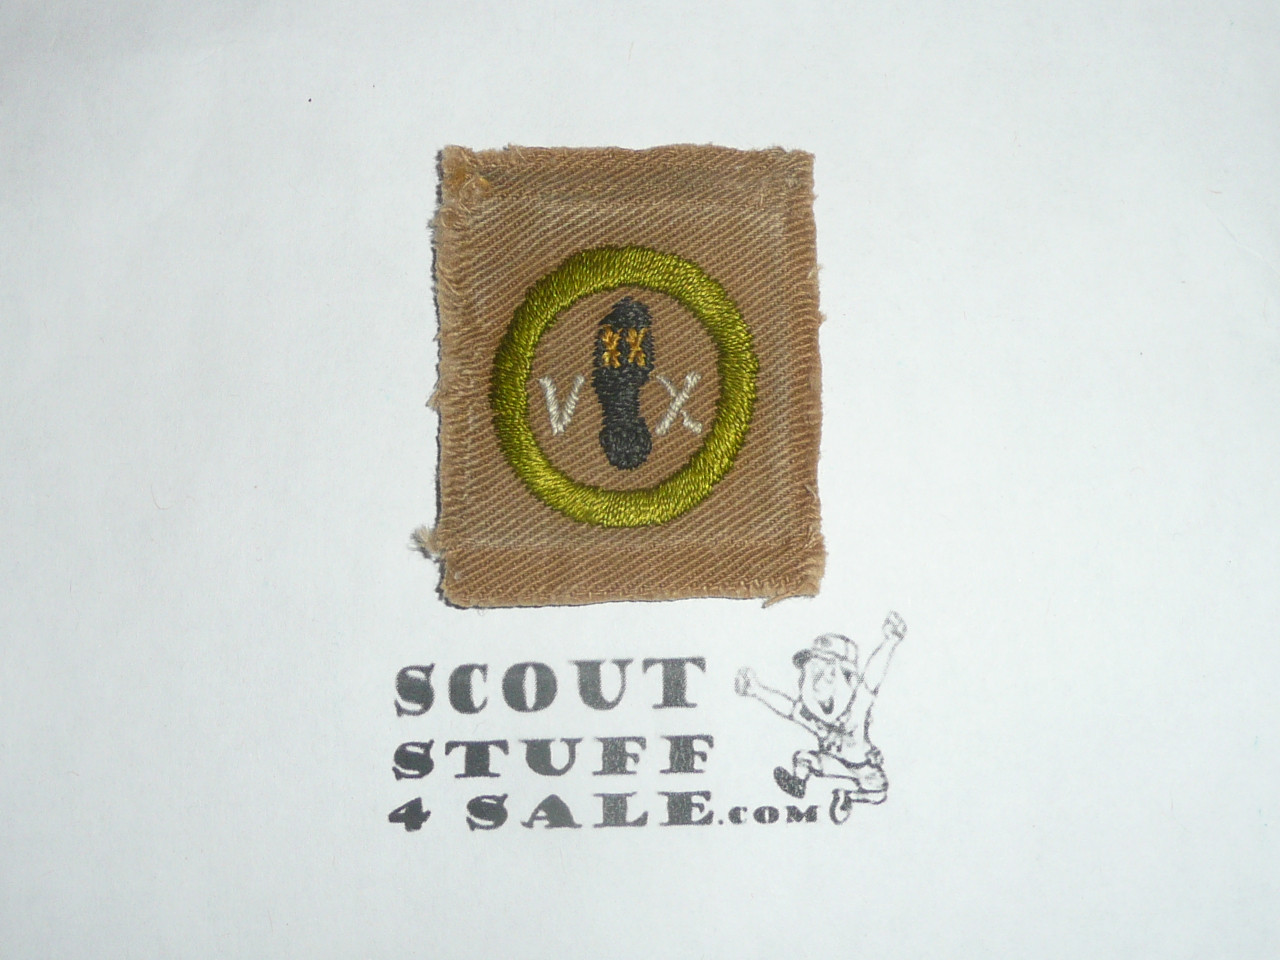 Hiking - Type A - Square Tan Merit Badge (1911-1933), used